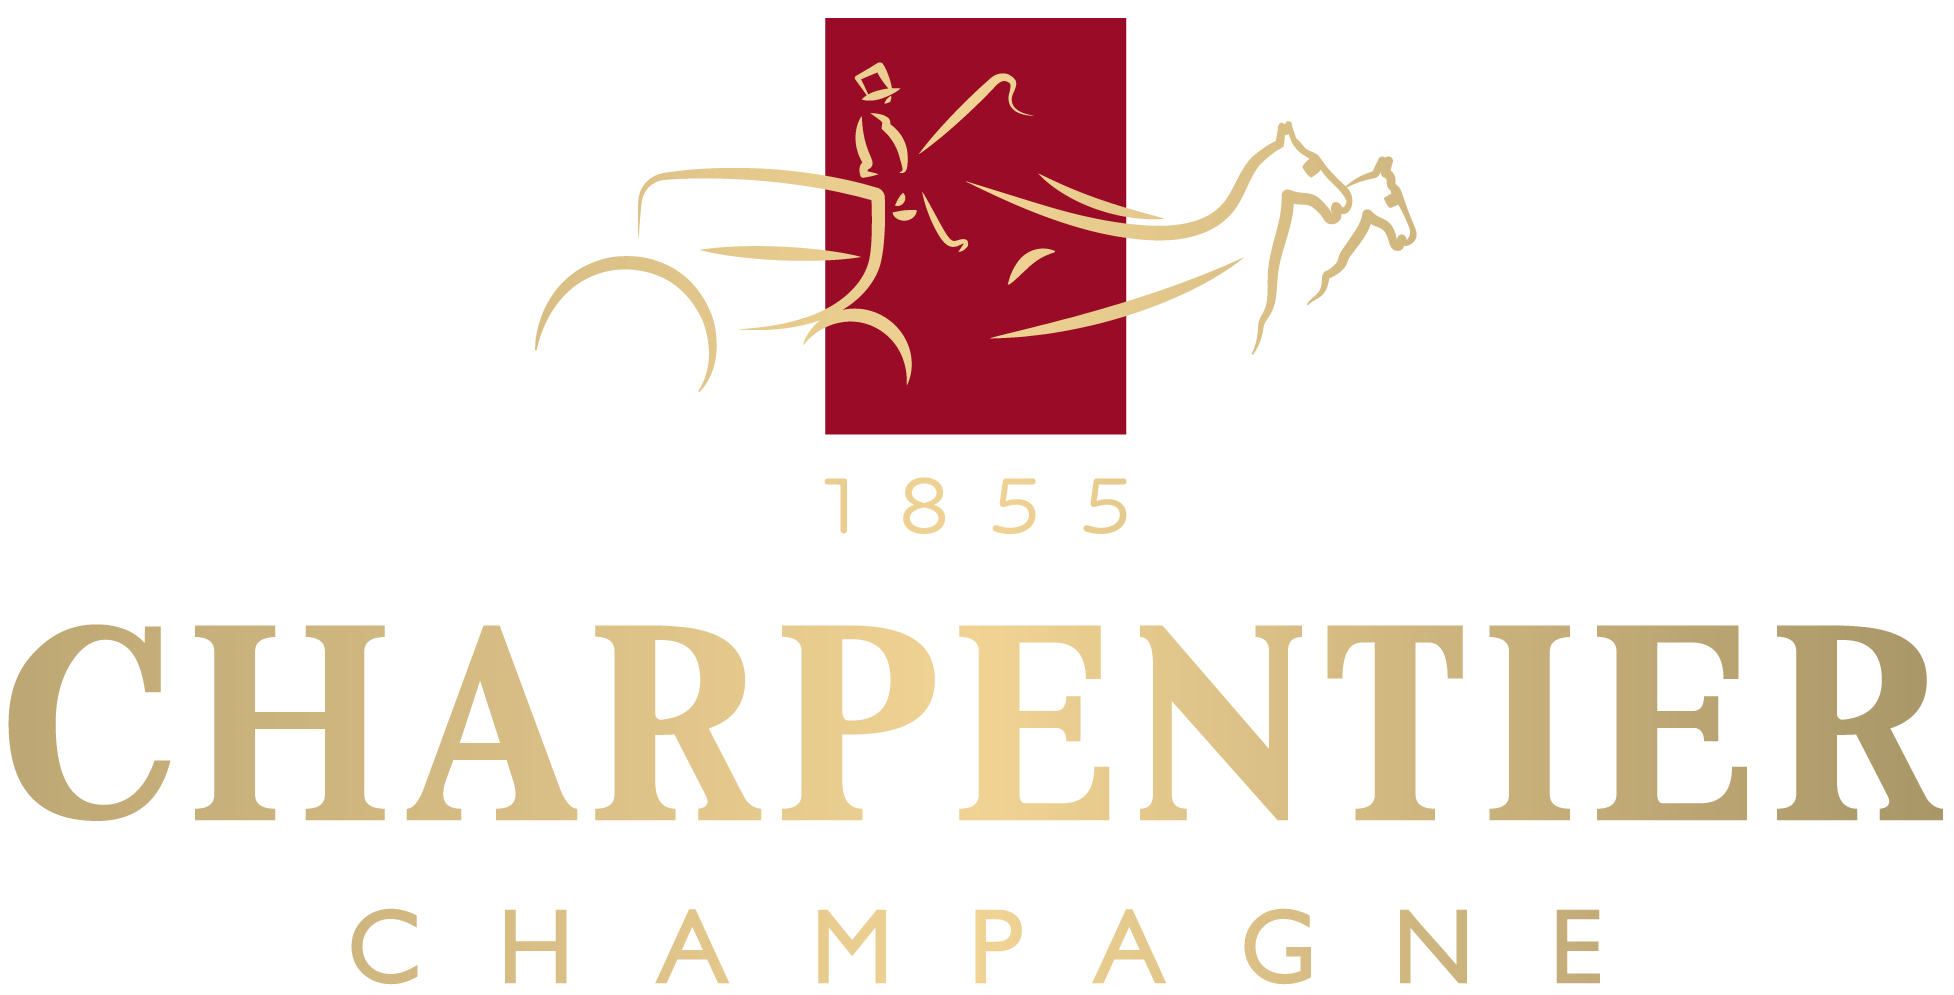 Logo Champagne Charpentier